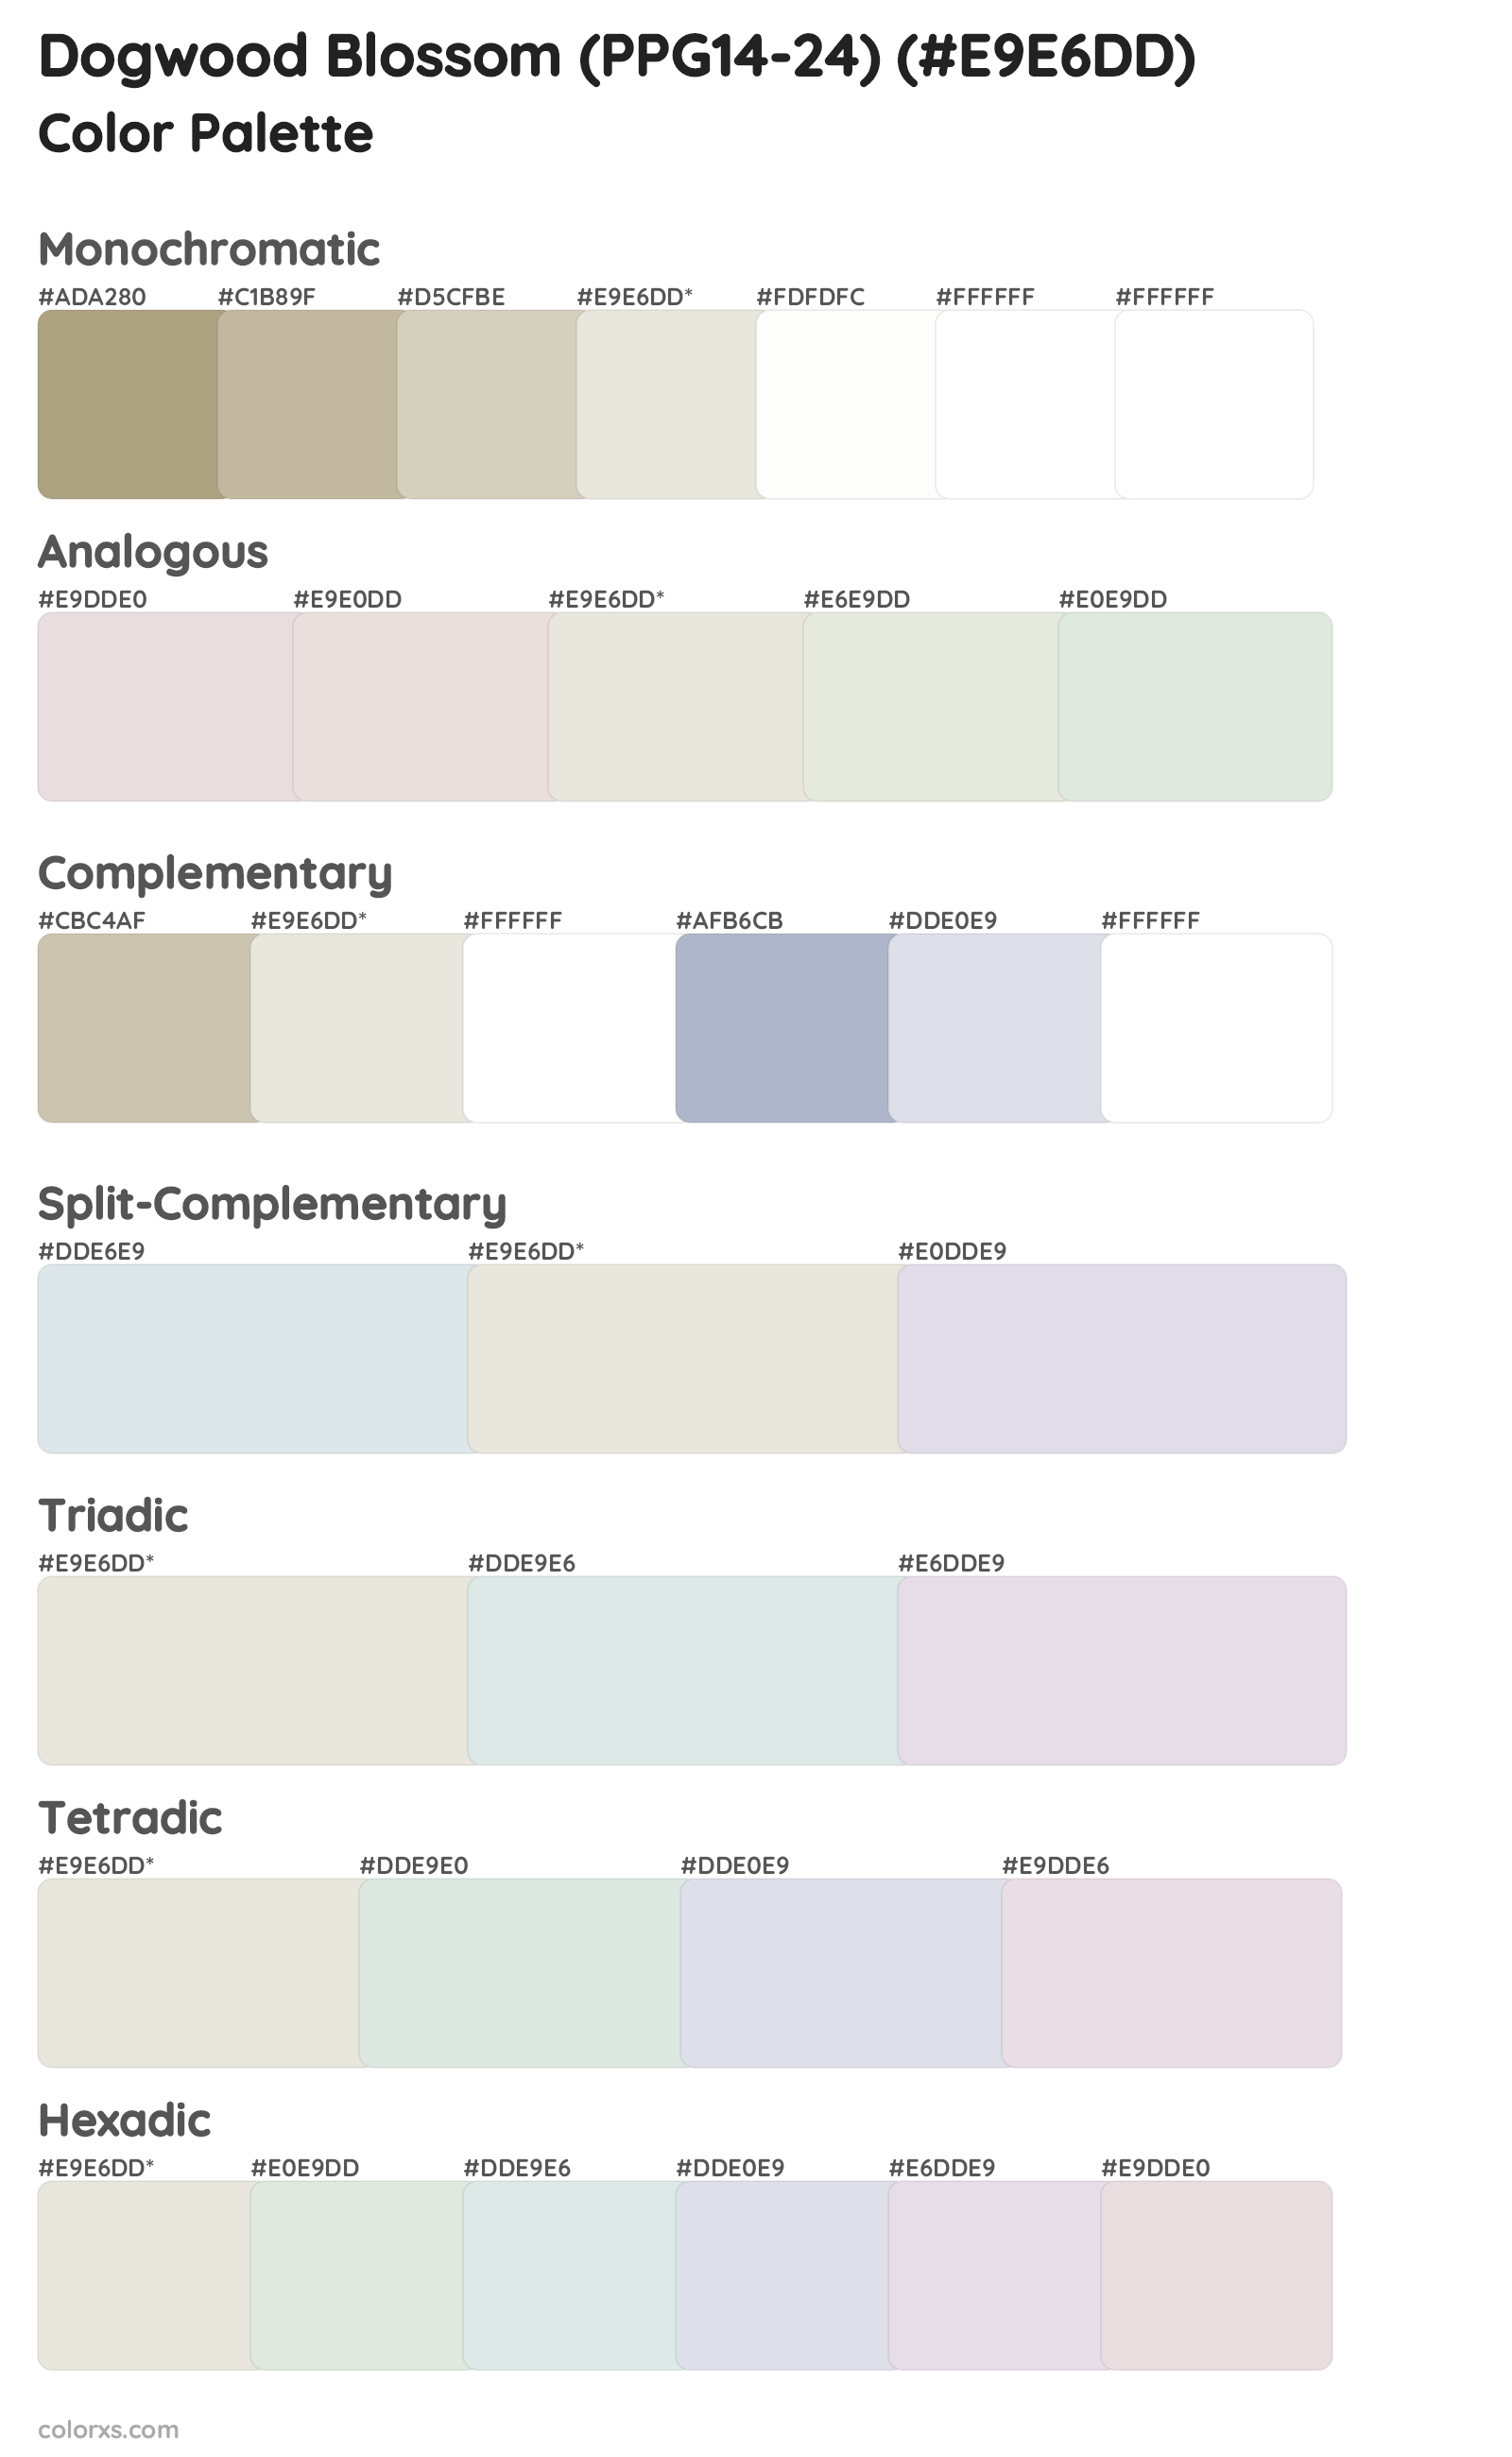 Dogwood Blossom (PPG14-24) Color Scheme Palettes